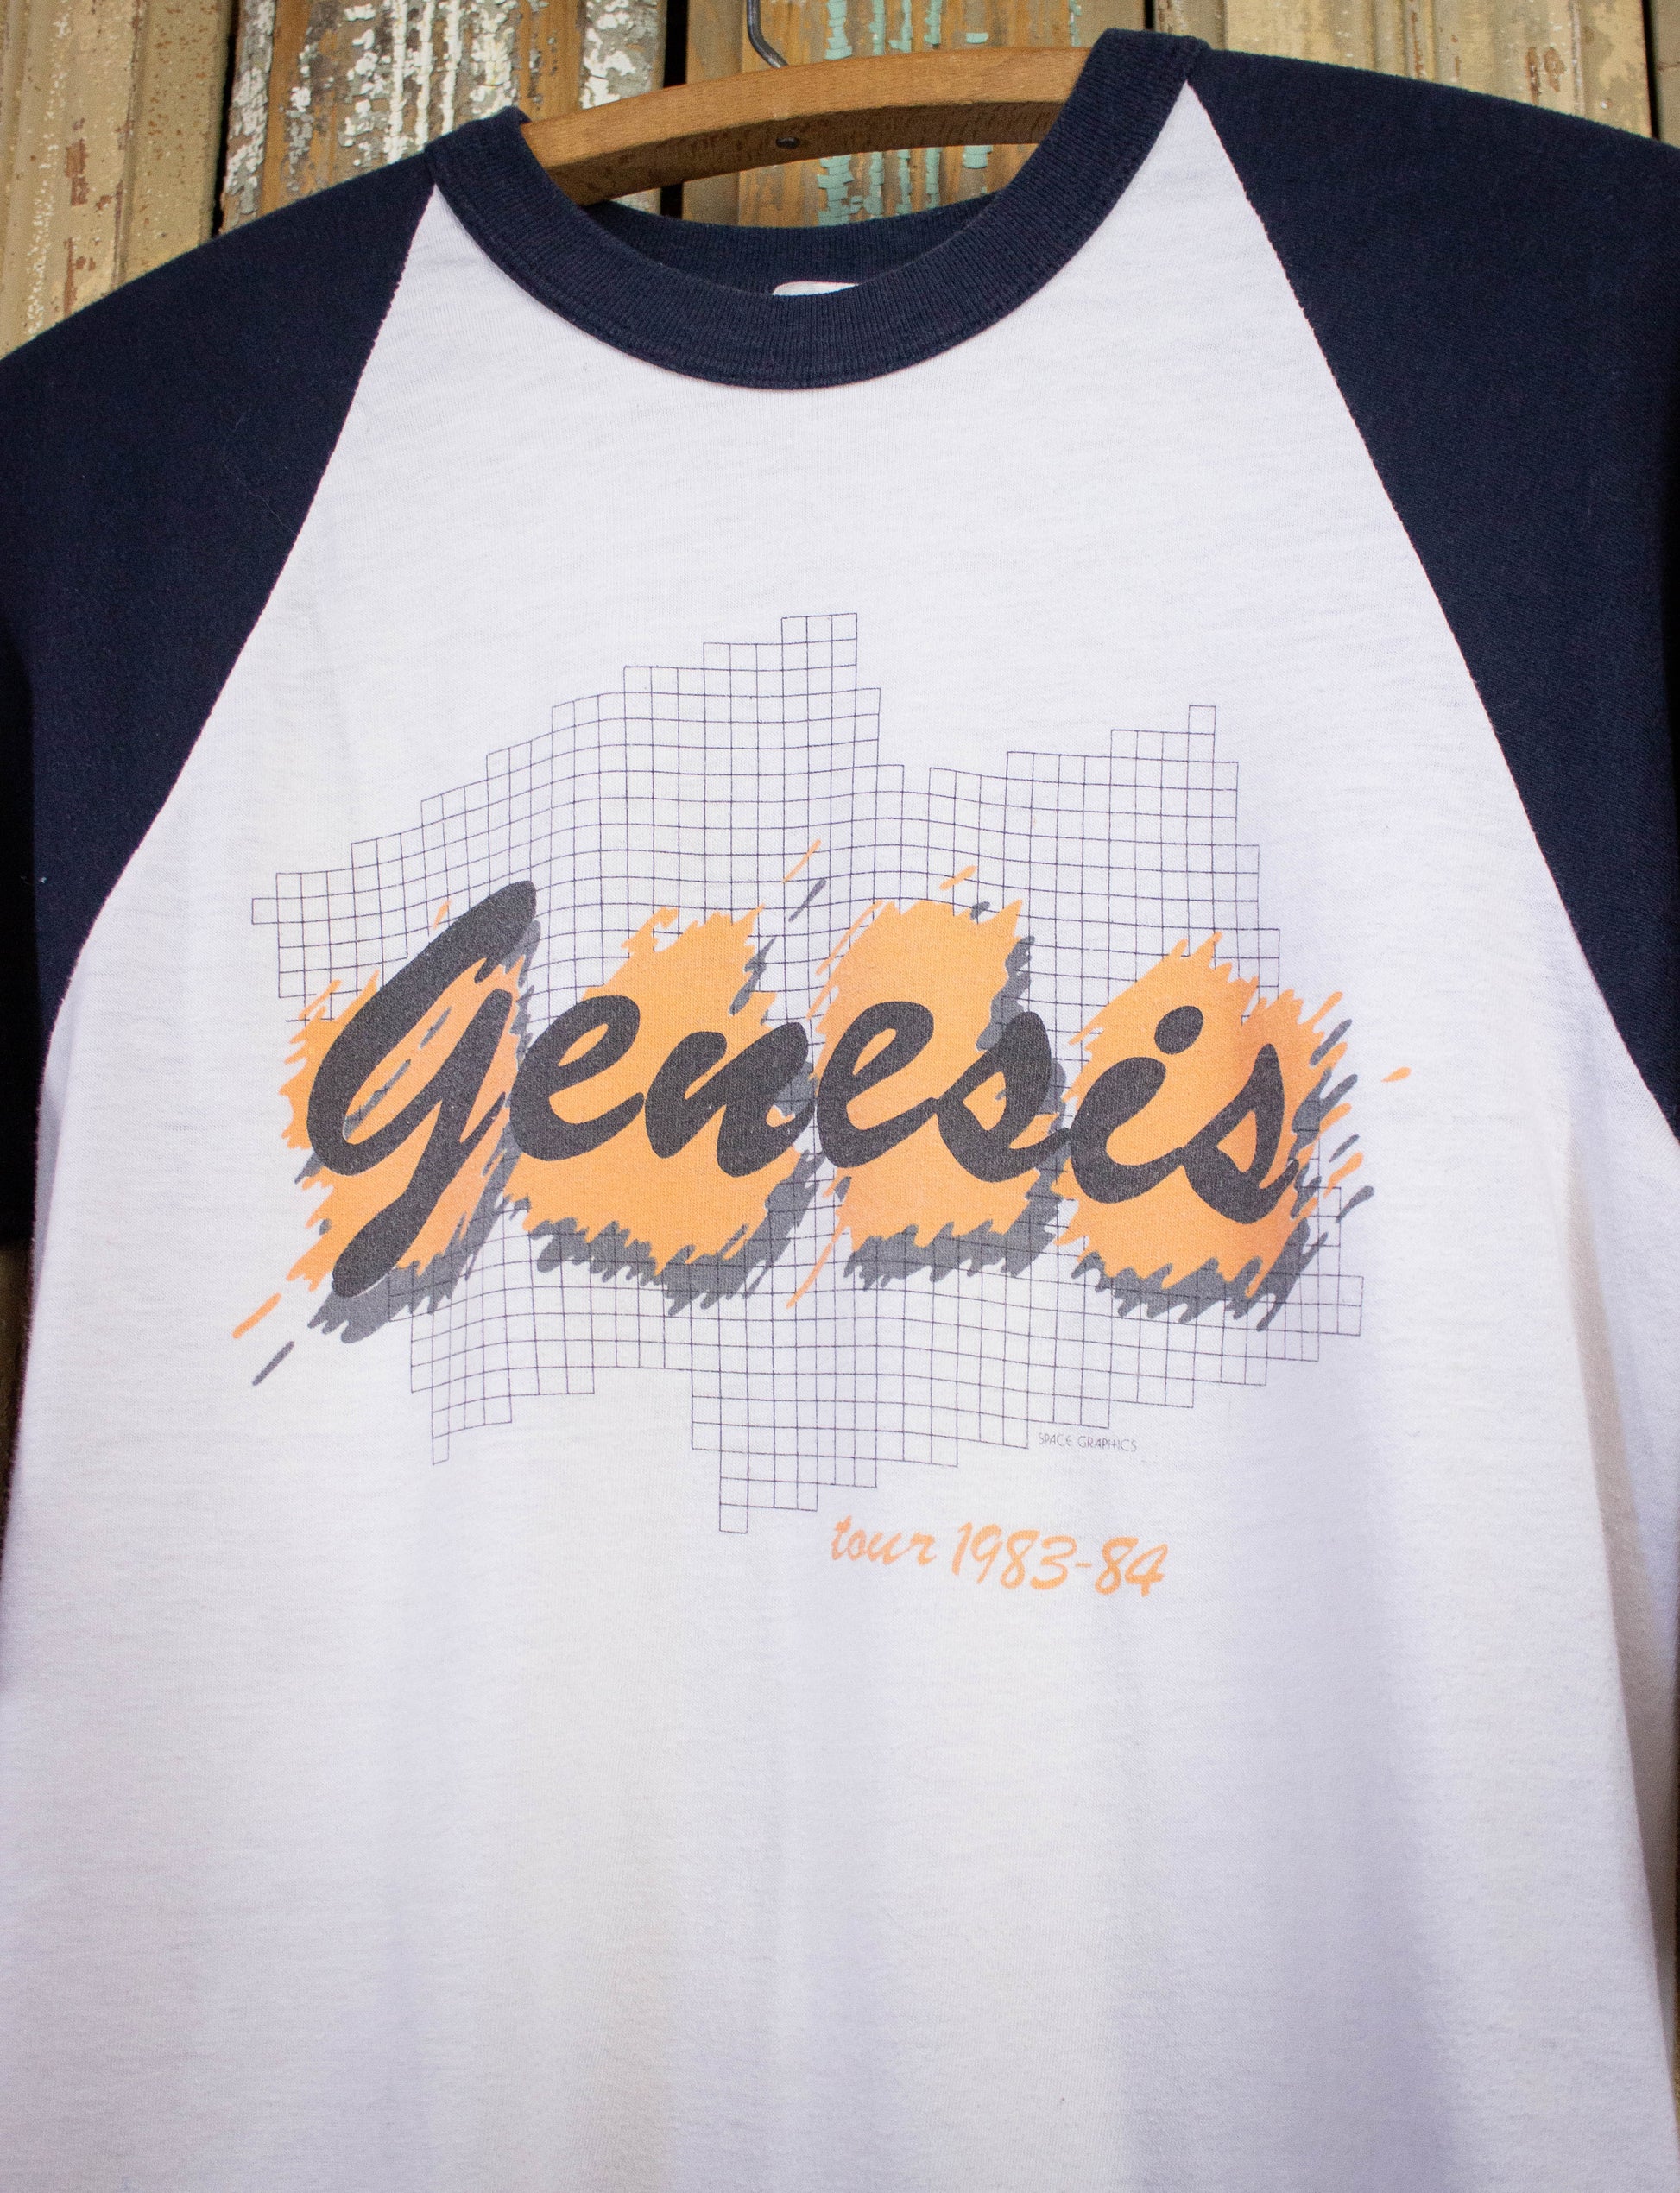 Vintage Genesis Mama Tour Raglan Concert T Shirt 1983-84 Navy/White Small